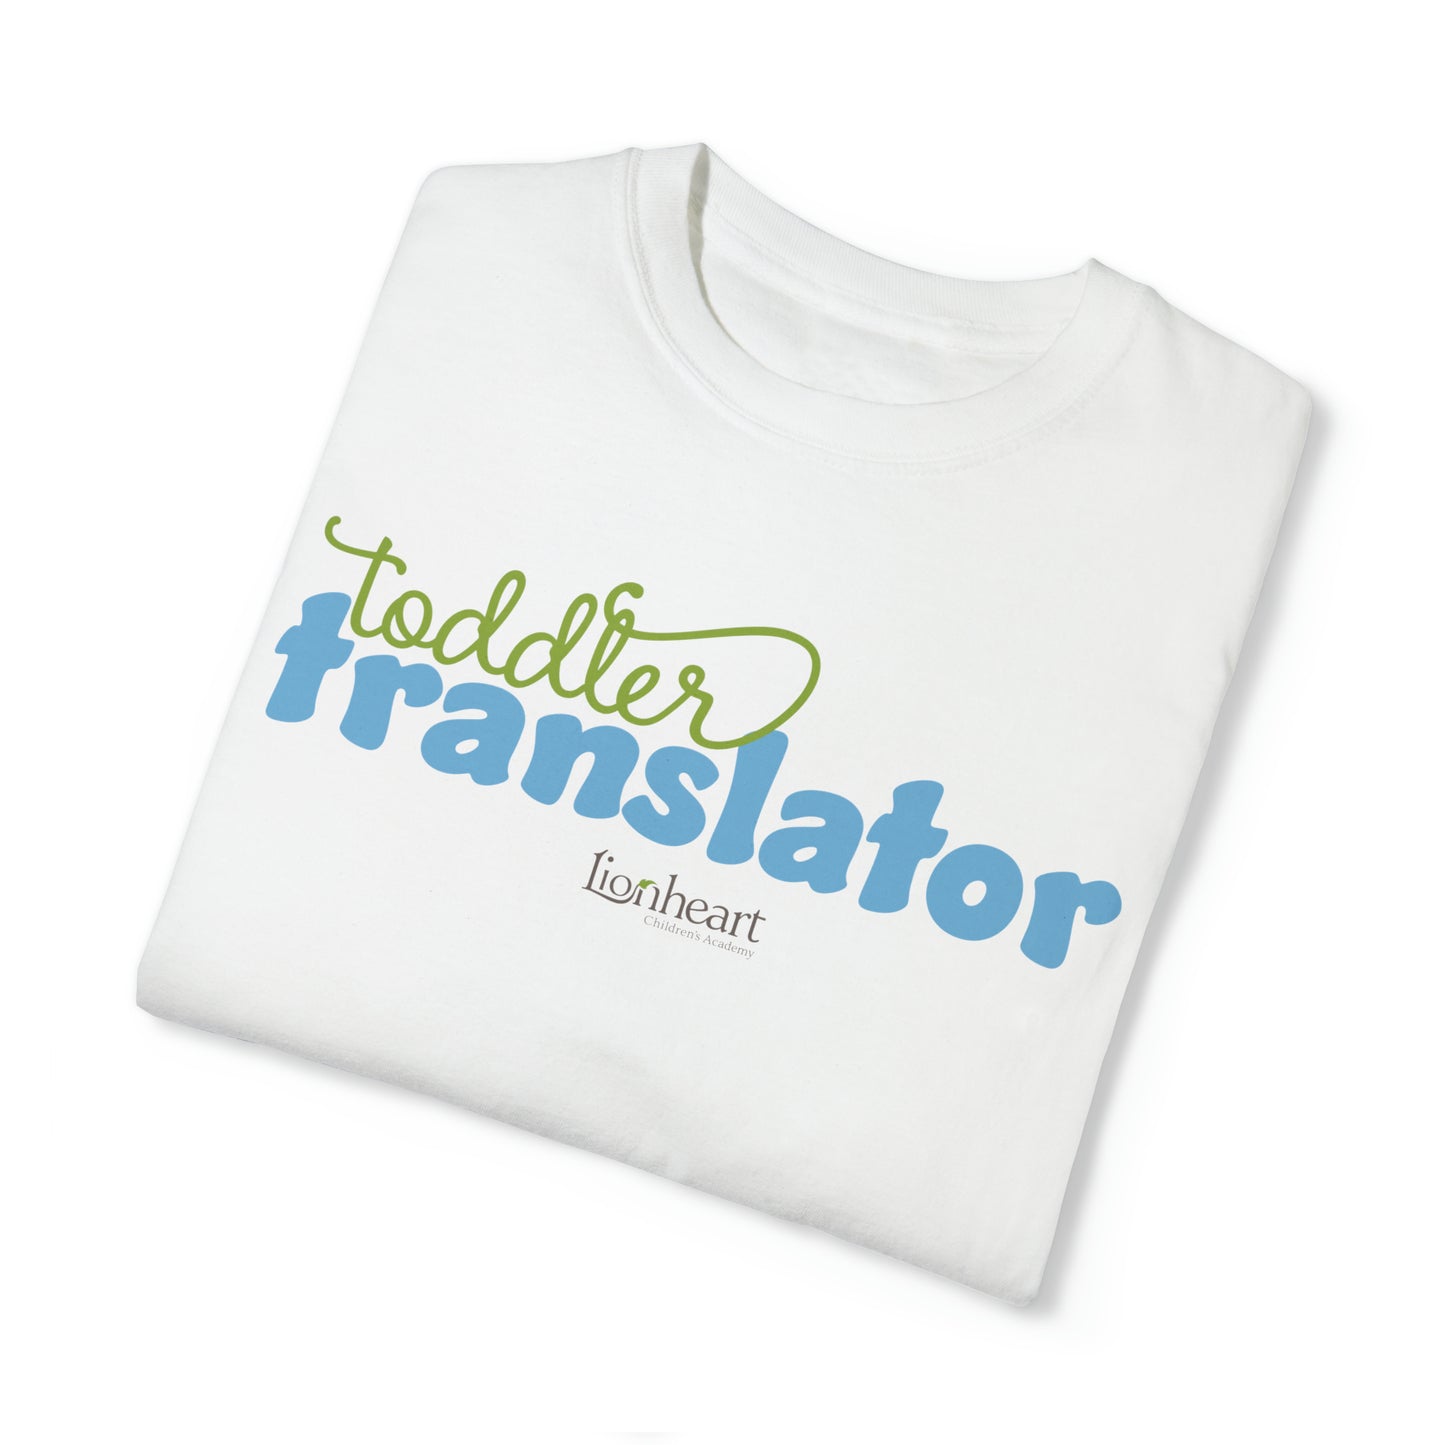 Toddler Translator Shirt